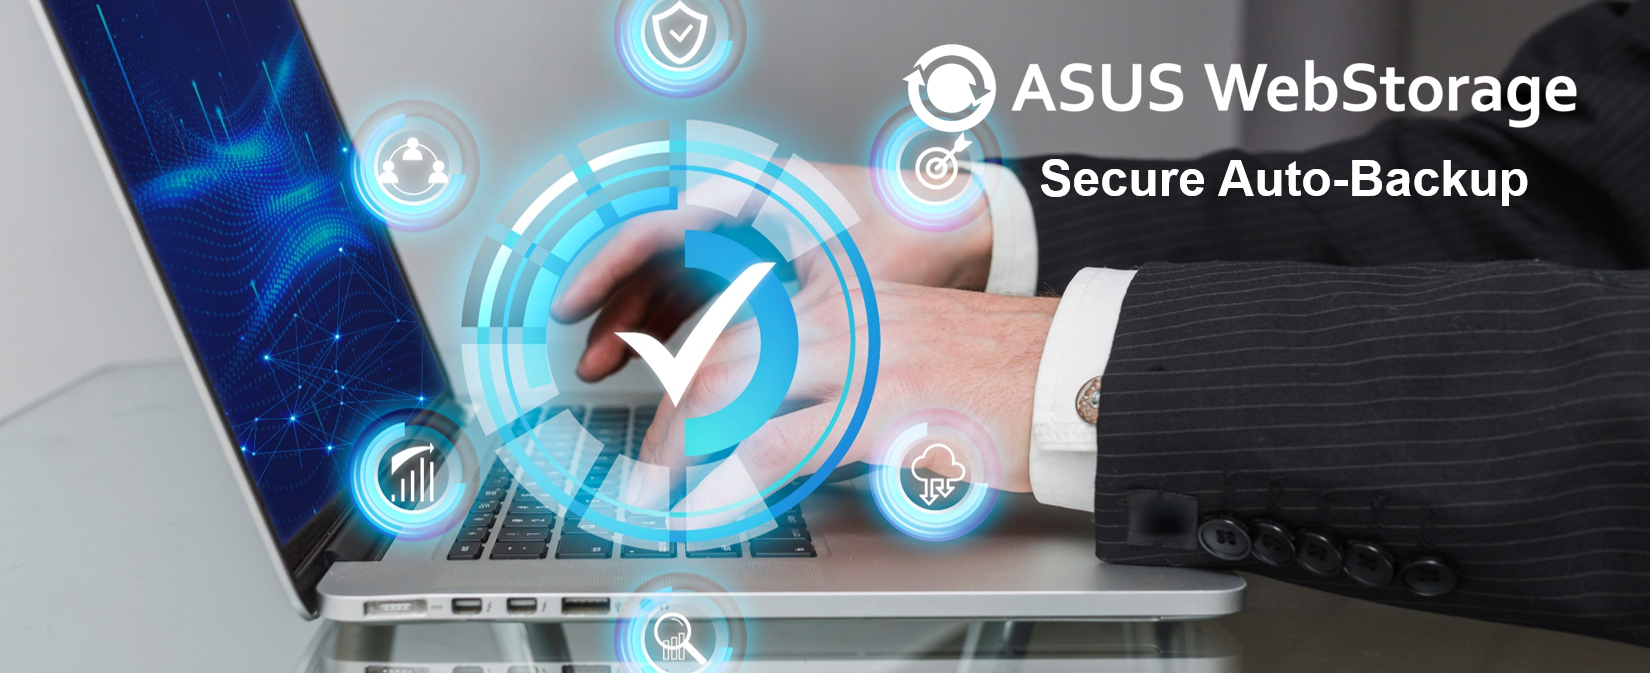 ASUS Secure Auto-Backup 雲端備份